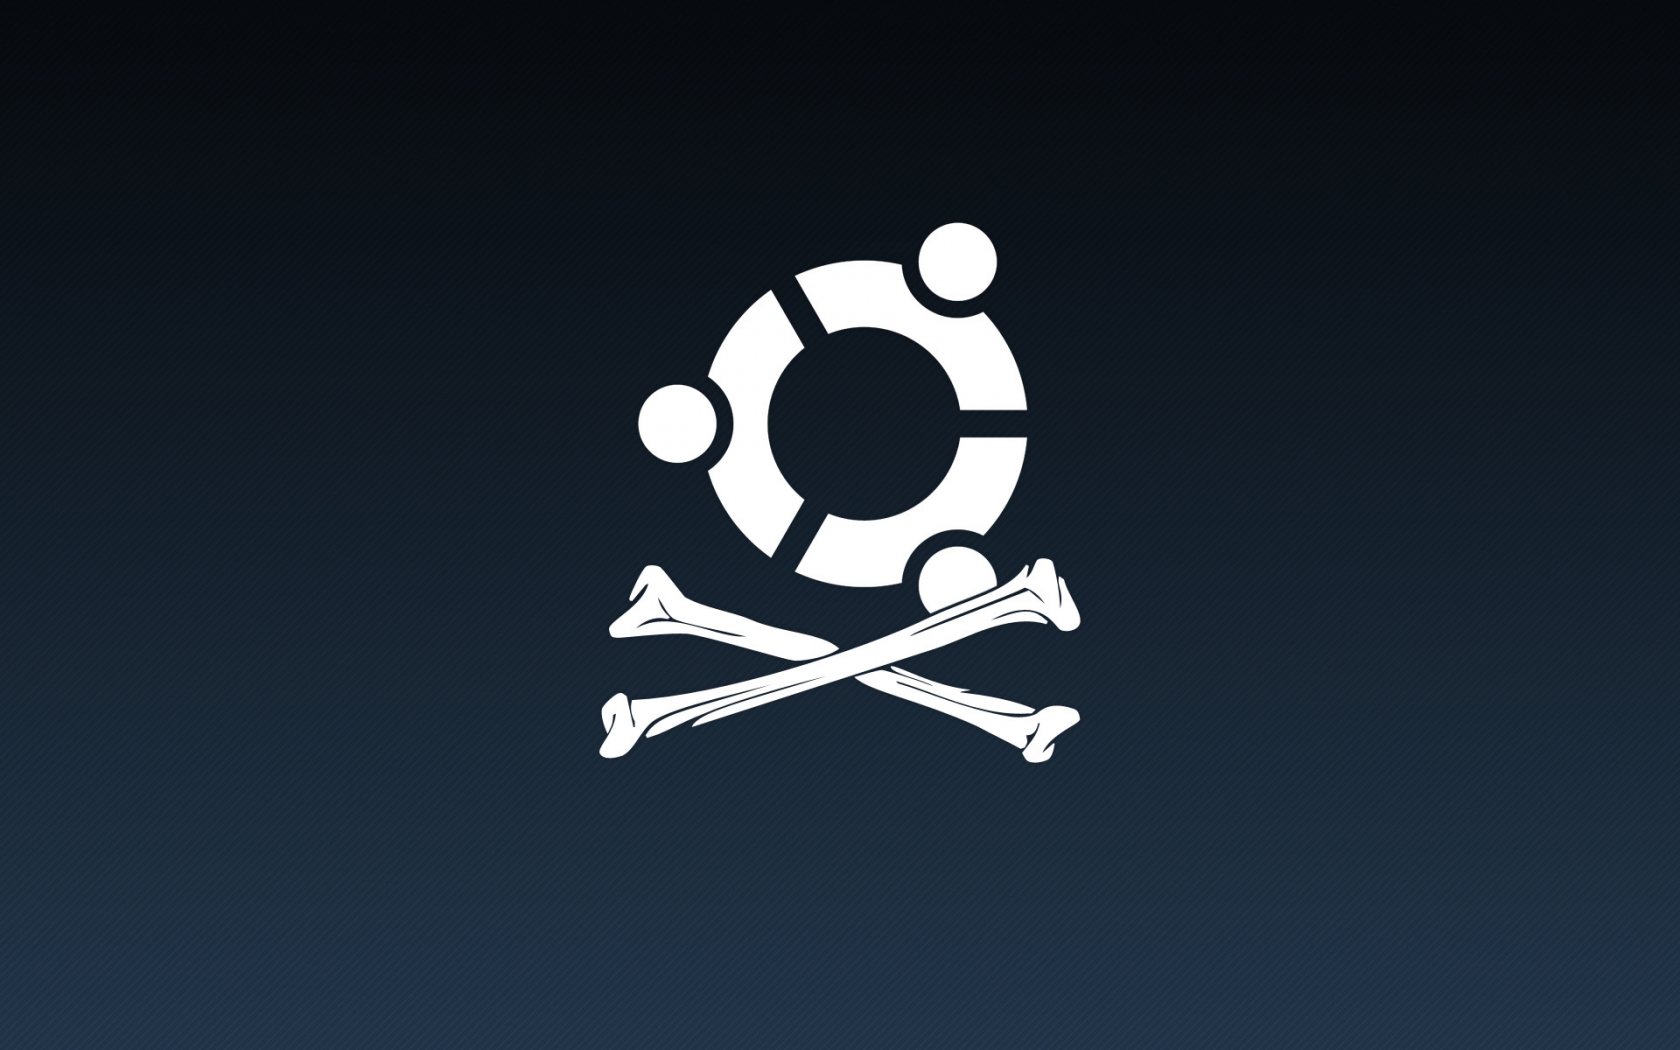 Pirate Ubuntu for 1680 x 1050 widescreen resolution